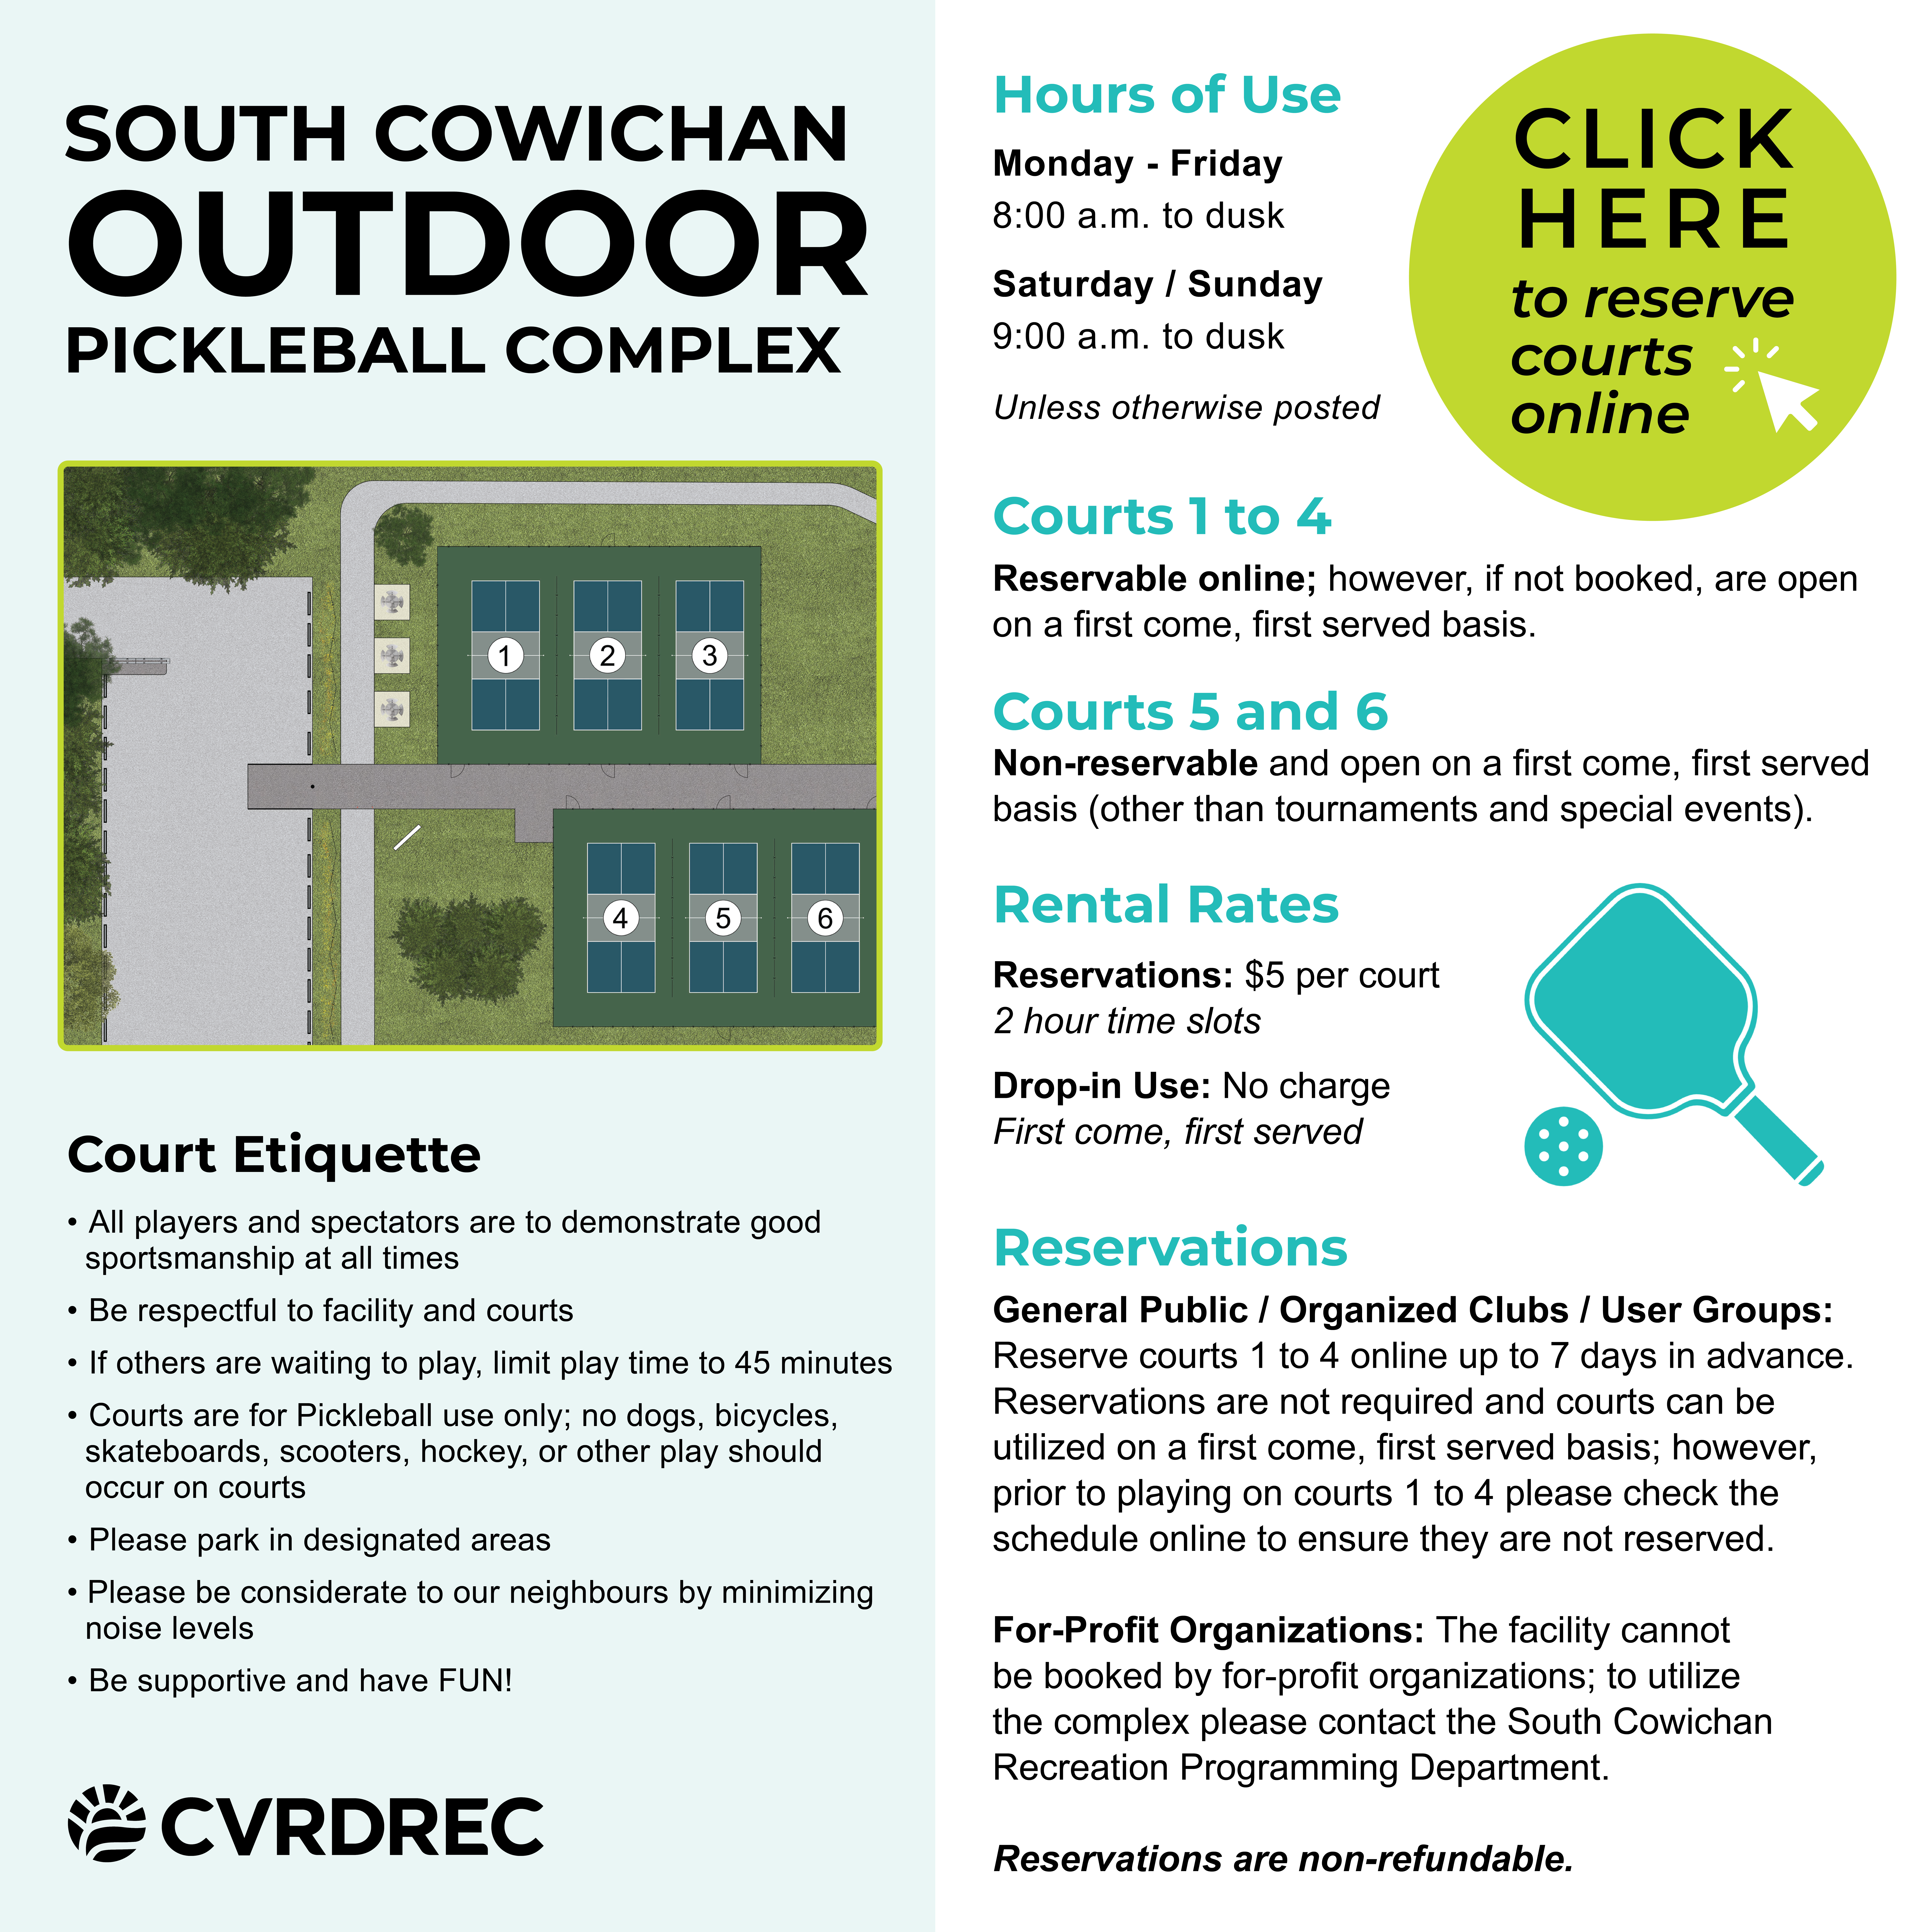 KPRC Outdoor Pickleball Courts